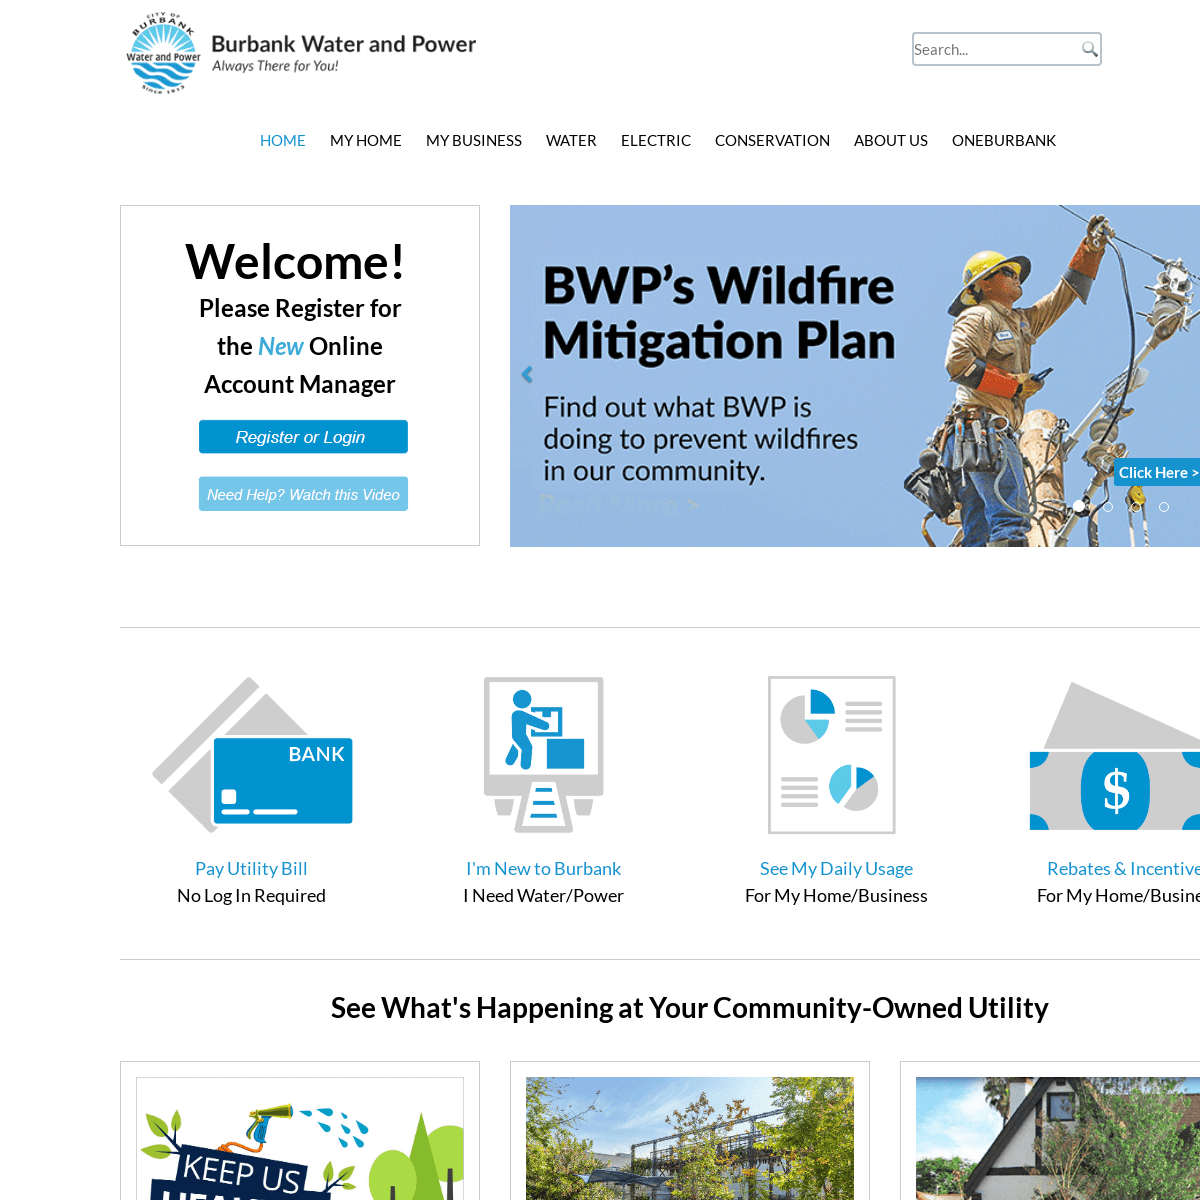 A complete backup of burbankwaterandpower.com